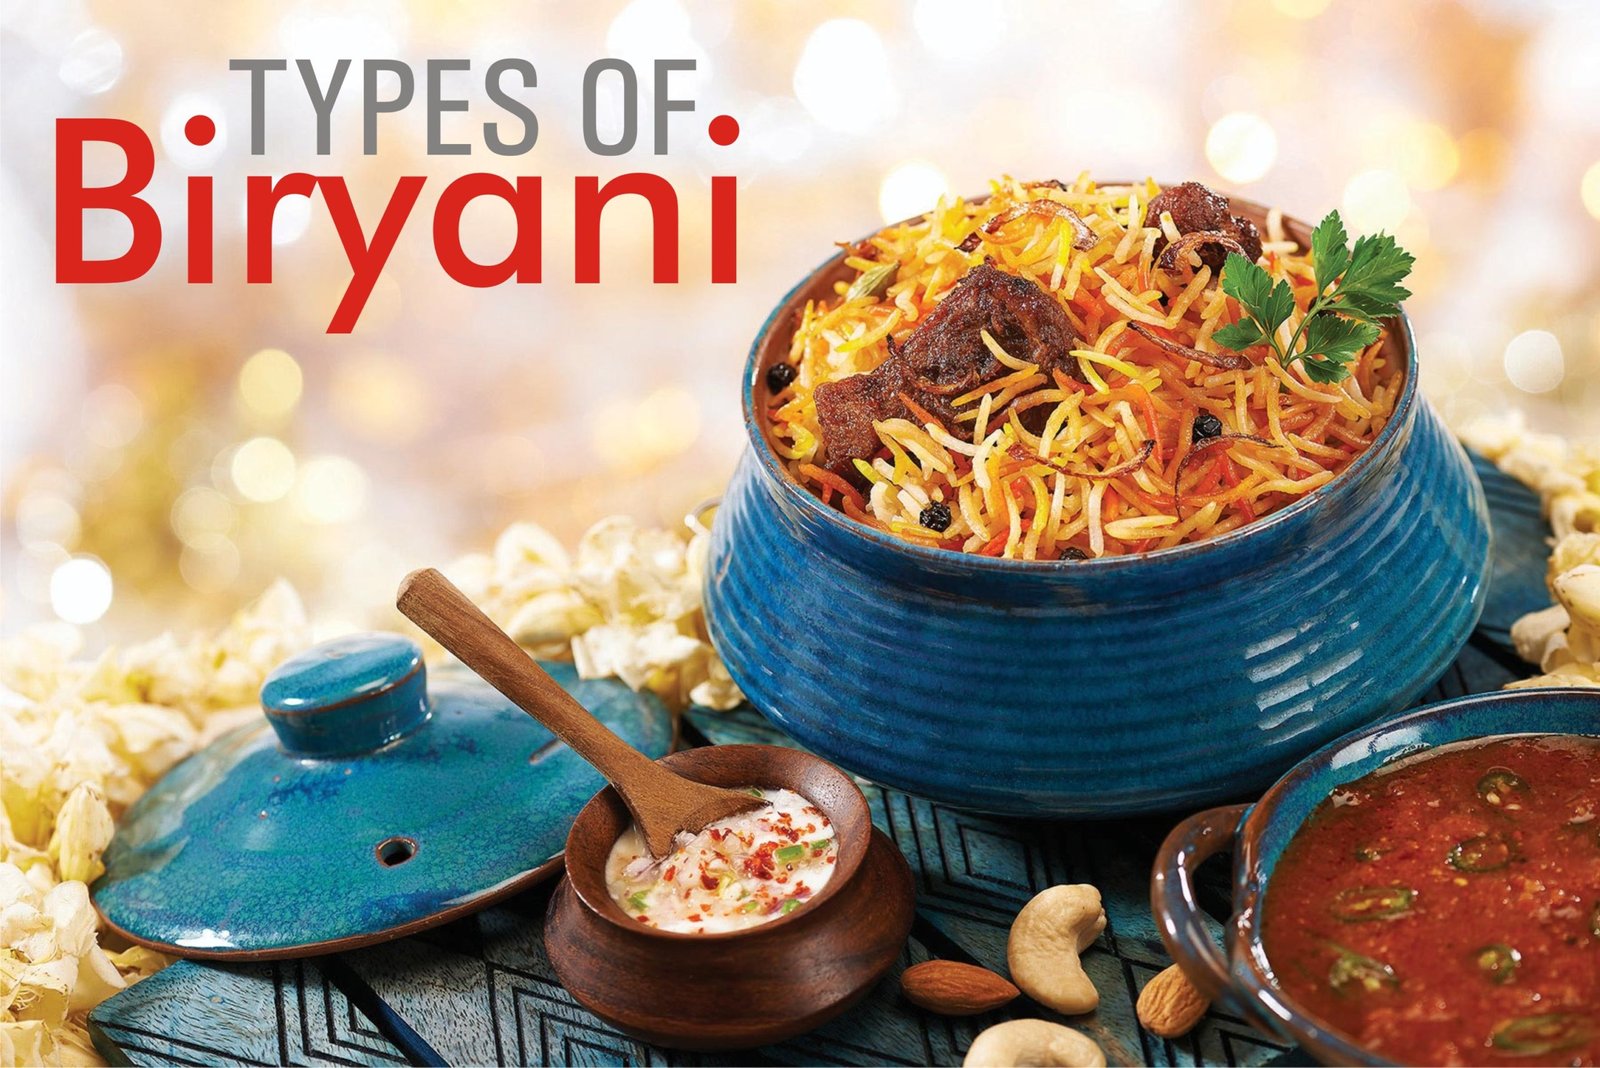 Types of Biryani